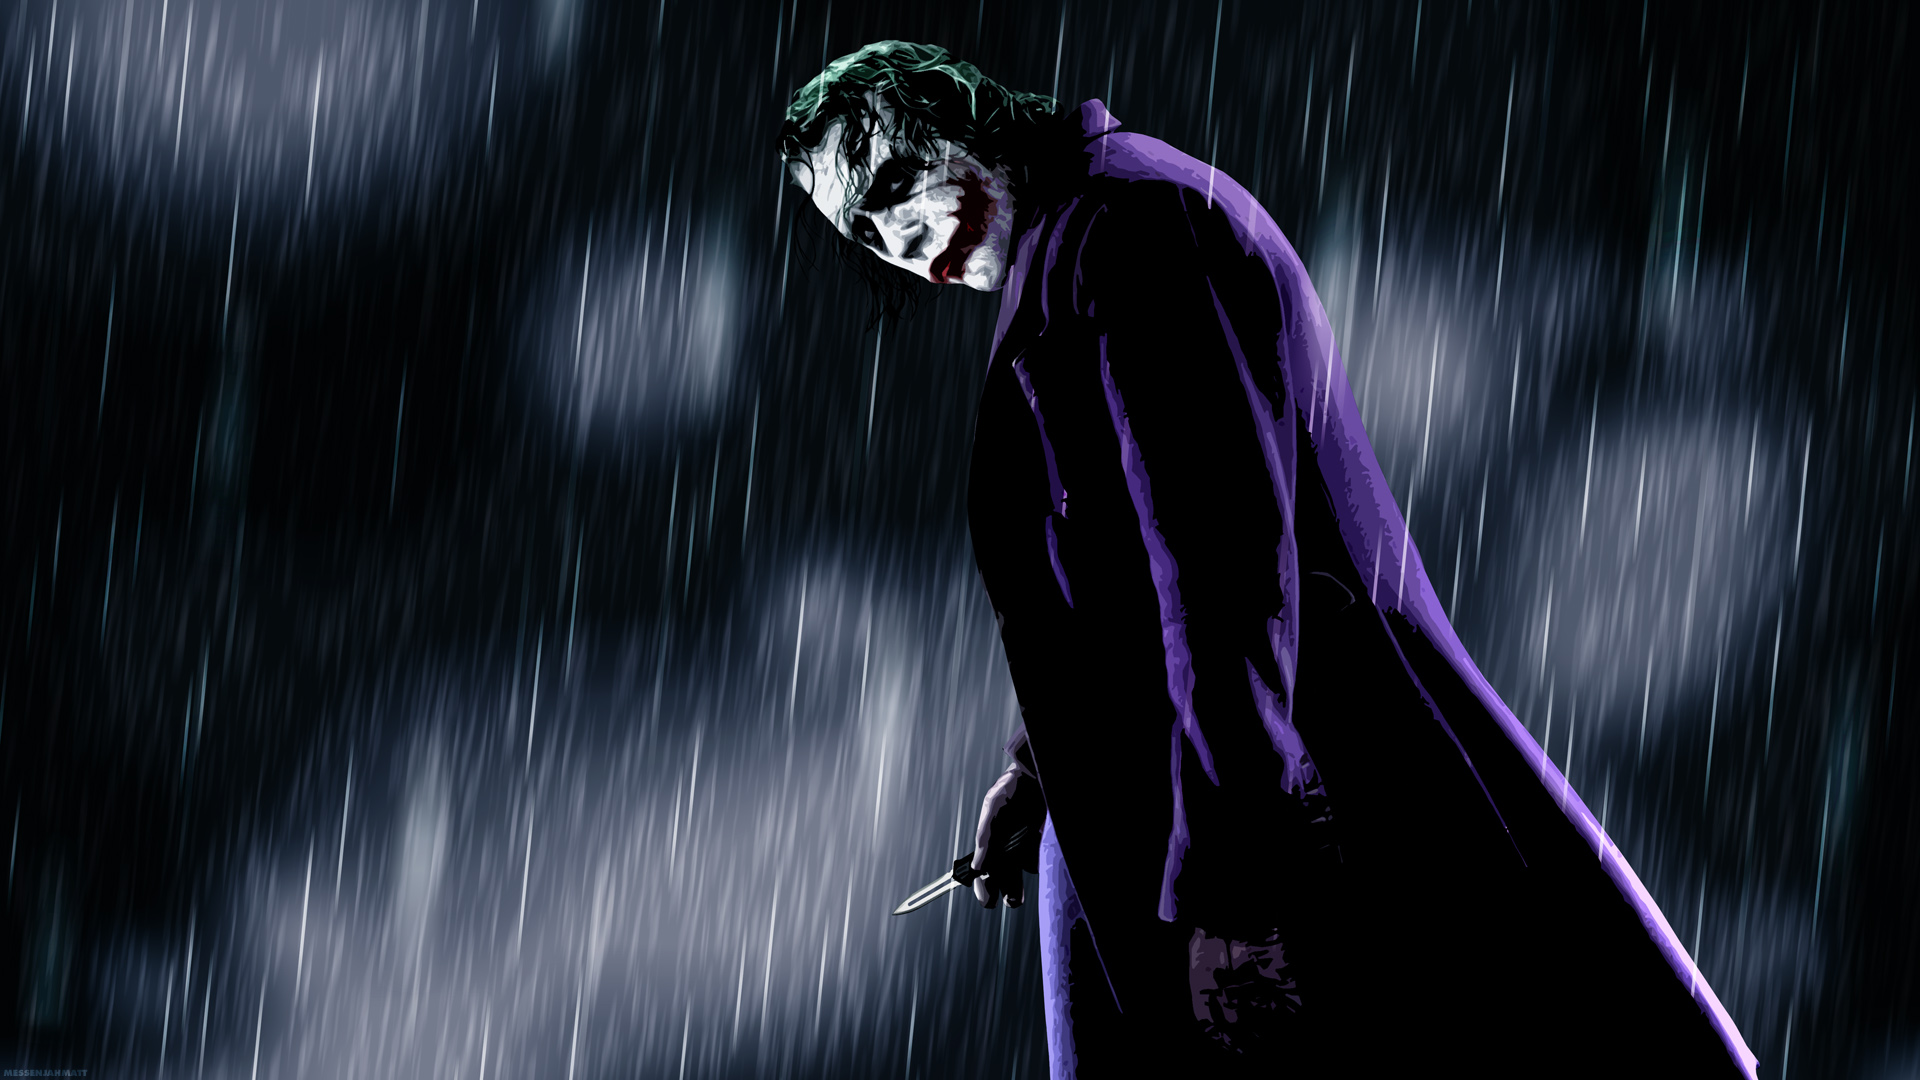 Download wallpaper for 720x1280 resolution | Batman The Dark Knight Rain  Joker HD | movies and tv series | Wallpaper Better